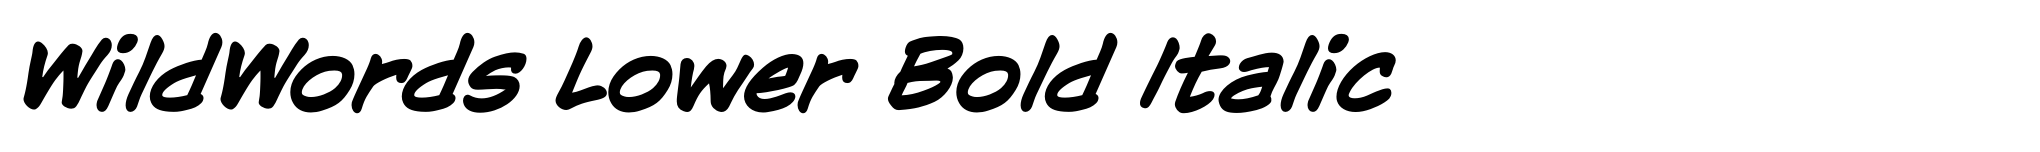 WildWords Lower Bold Italic image